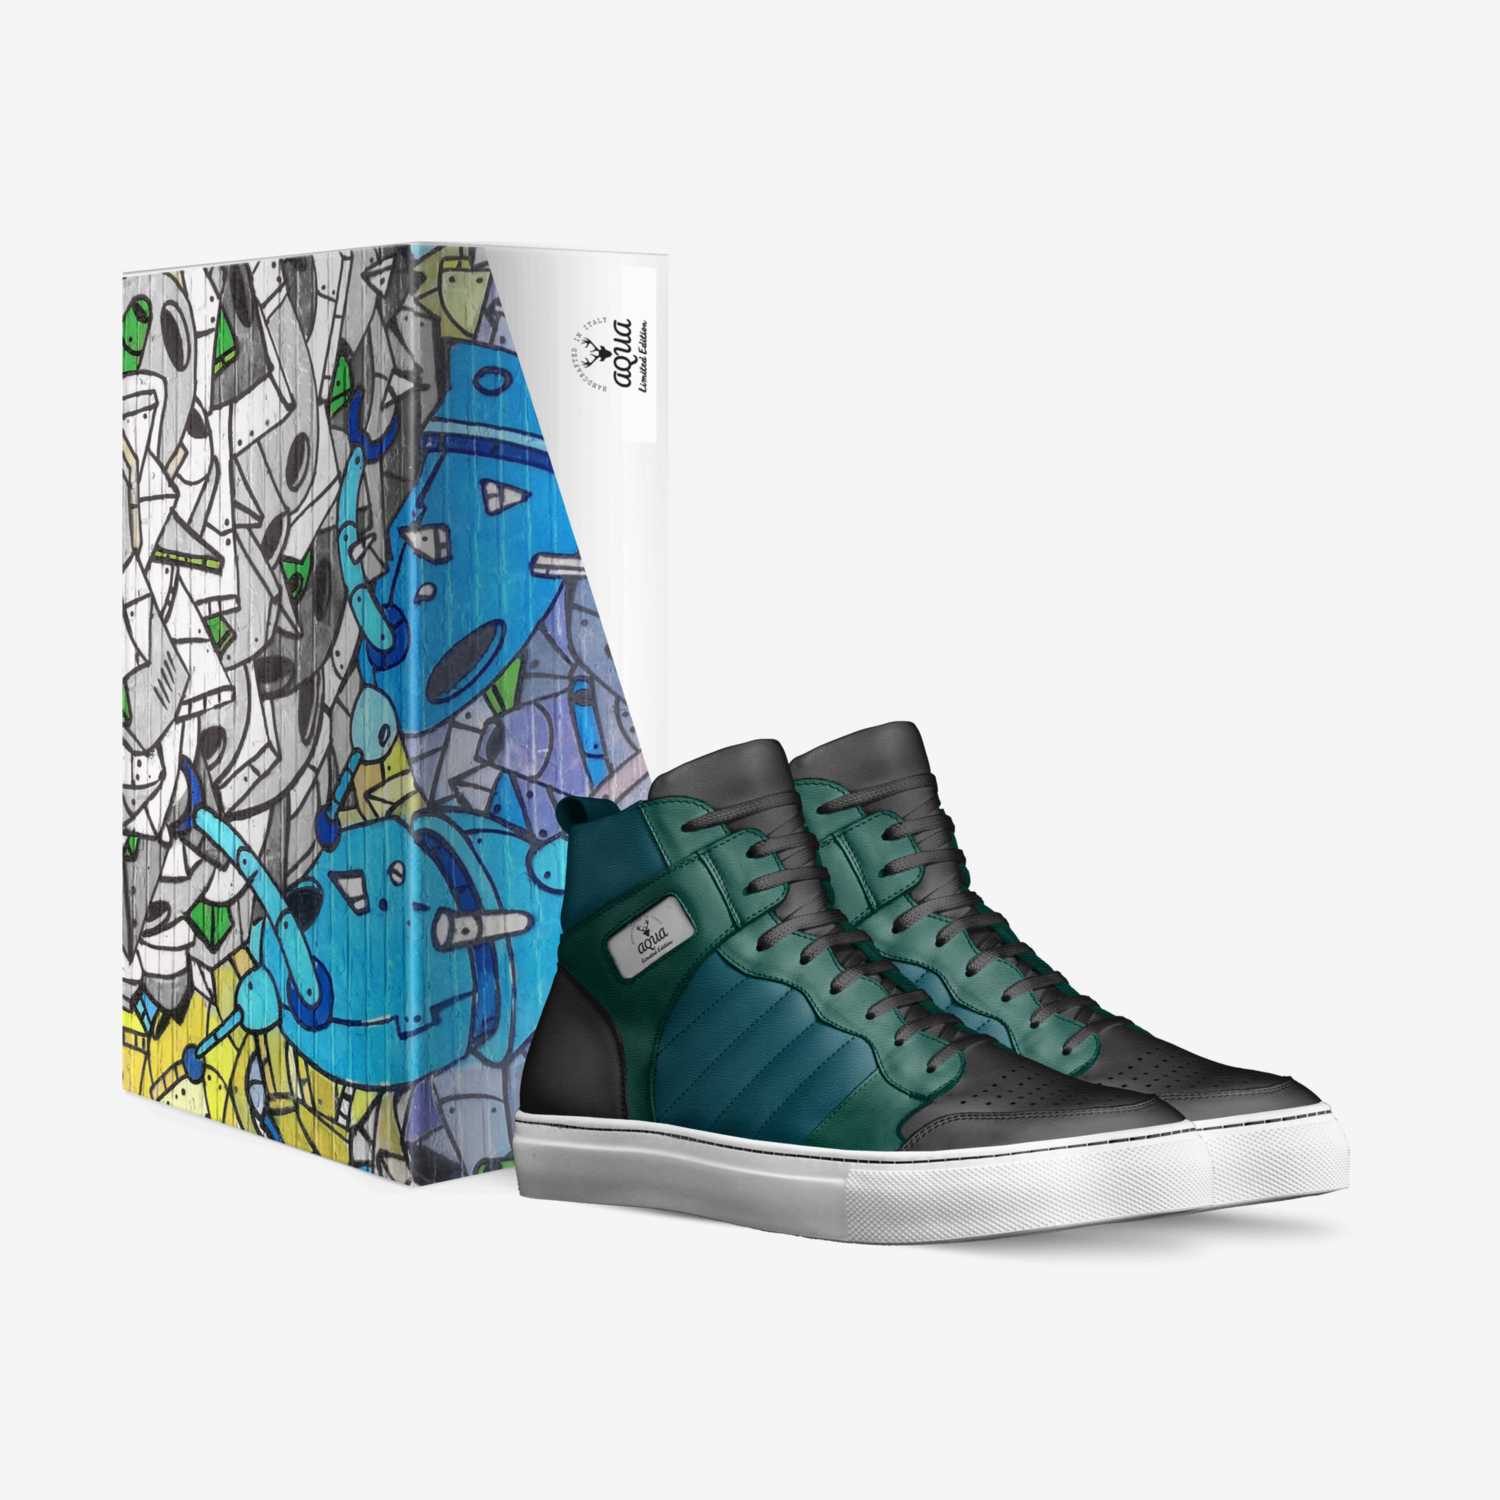 AQUA custom made in Italy shoes by Dimeji Ajasin | Box view